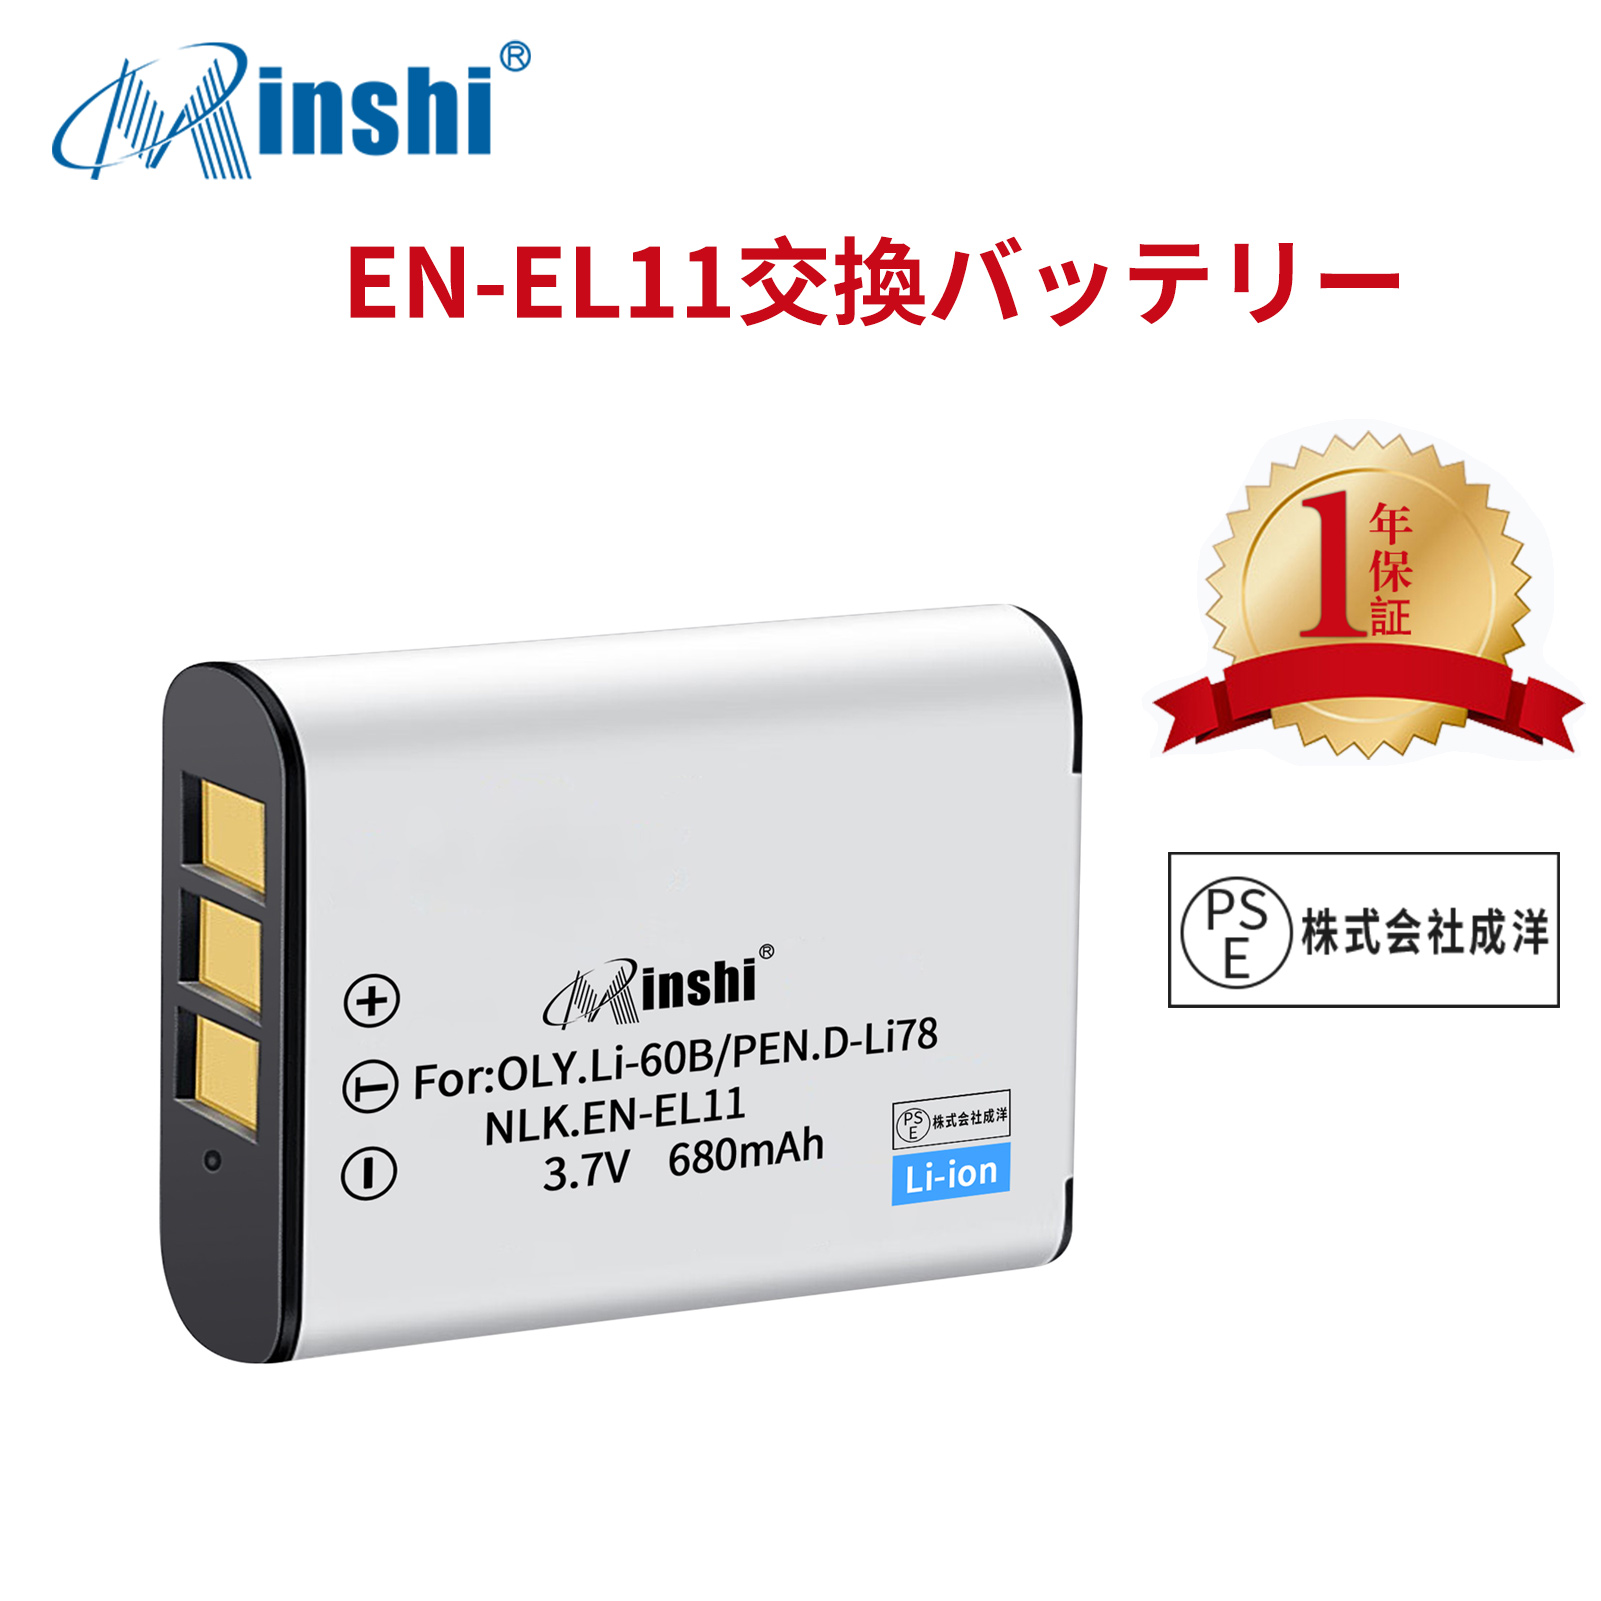 【1年保証】minshi NIKON EN-EL11 EN-EL11 【680mAh 3.7V】PSE認定済 高品質EN-EL15 EN-EL15a交換用バッテリー オリジナル充電器との互換性がない